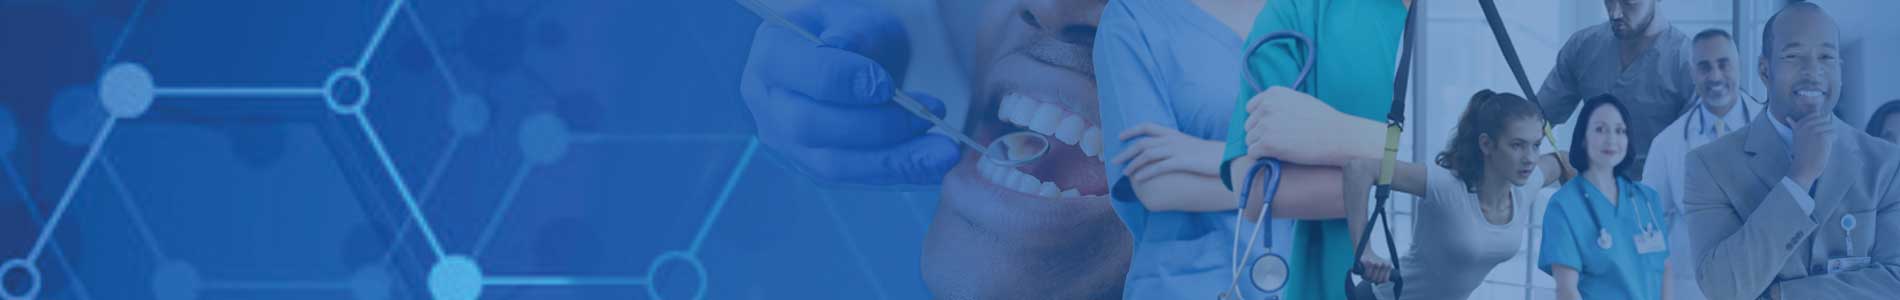 Dental Hygiene BSDH Application Instructions banner image